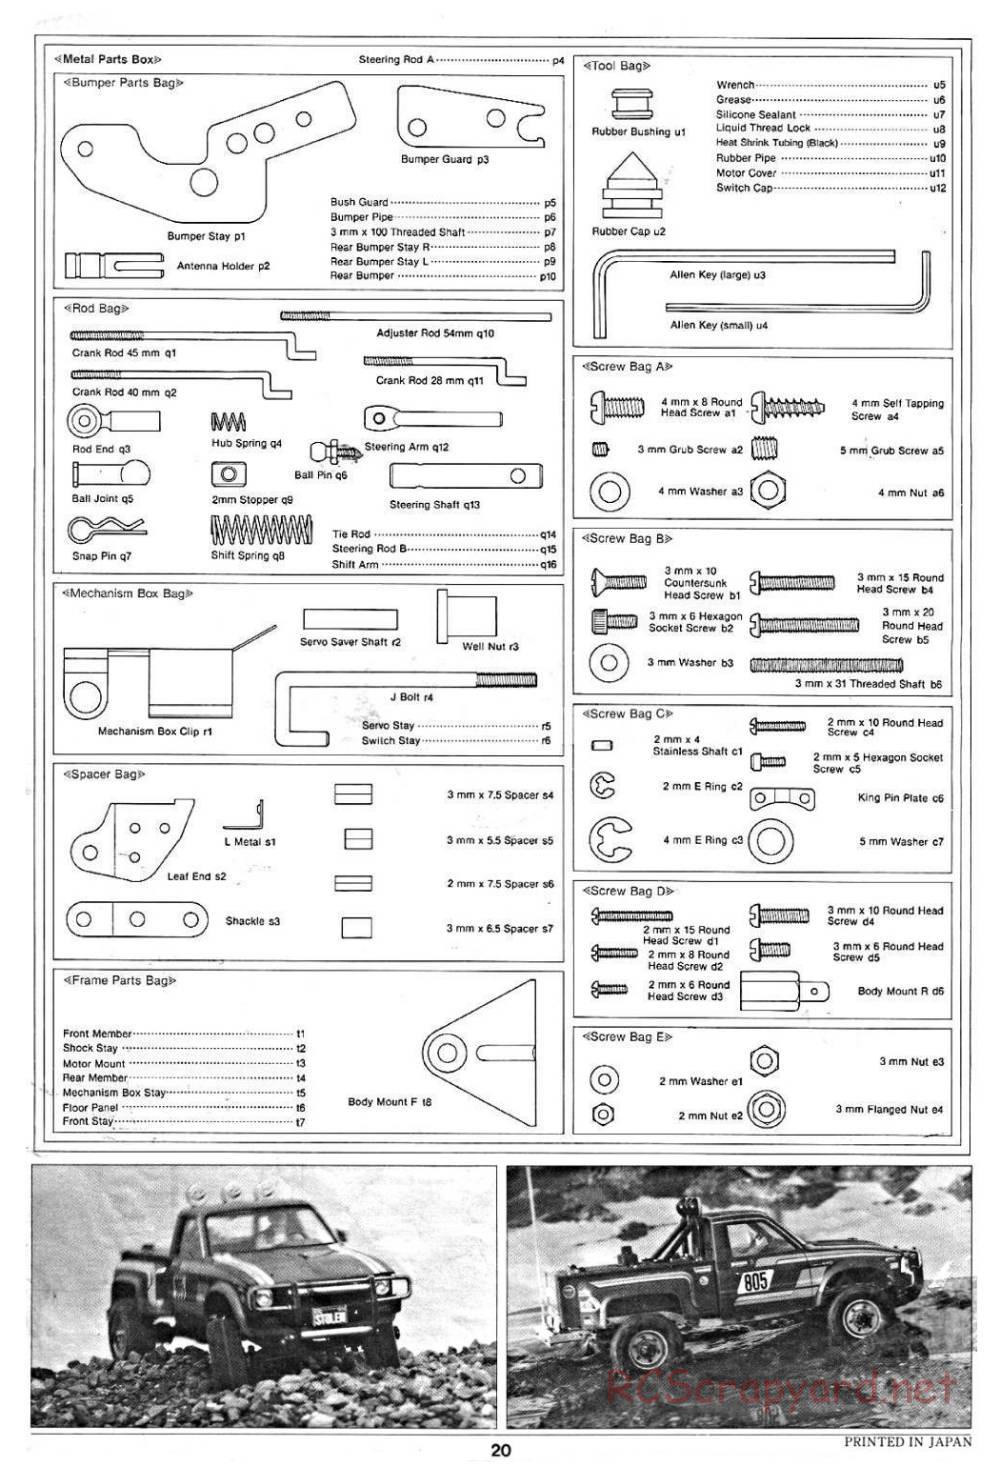 Tamiya - Toyota 4x4 Pick-Up - 58028 - Manual - Page 20